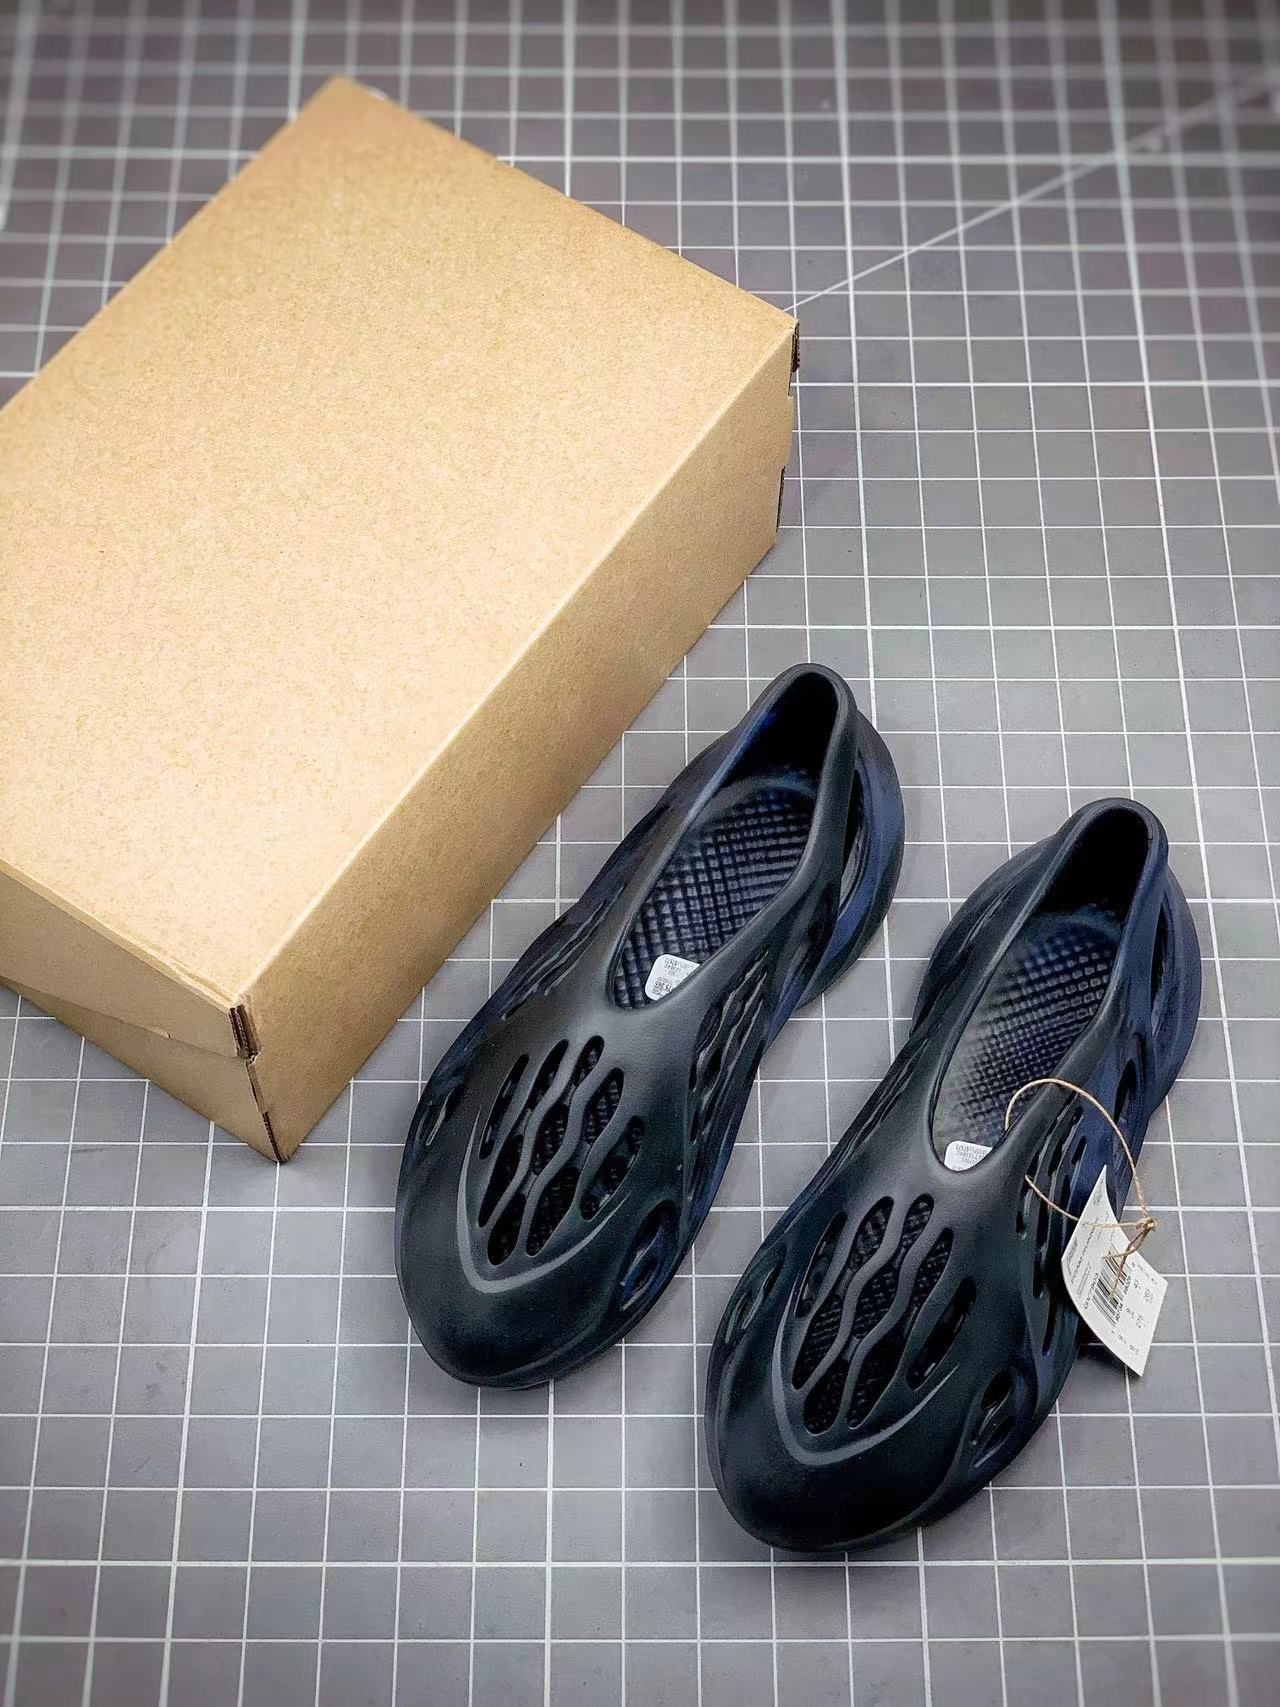 Adidas originals Yeezy Foam Runner 潮流運動 塑膠 沙灘涼鞋 男女同款